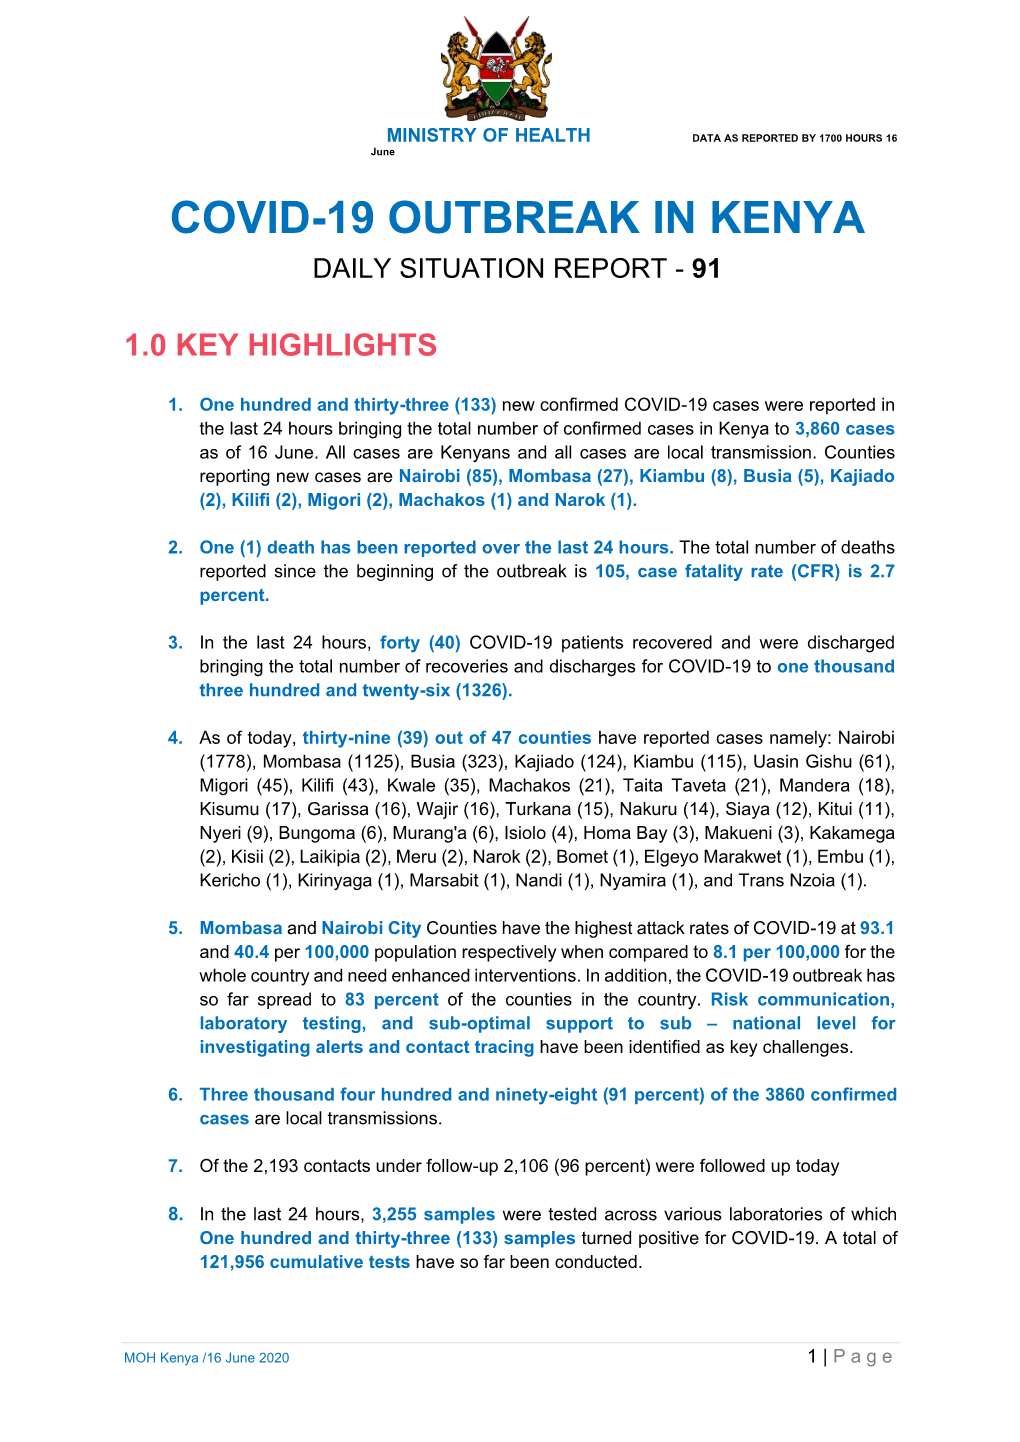 Covid-19 Outbreak in Kenya